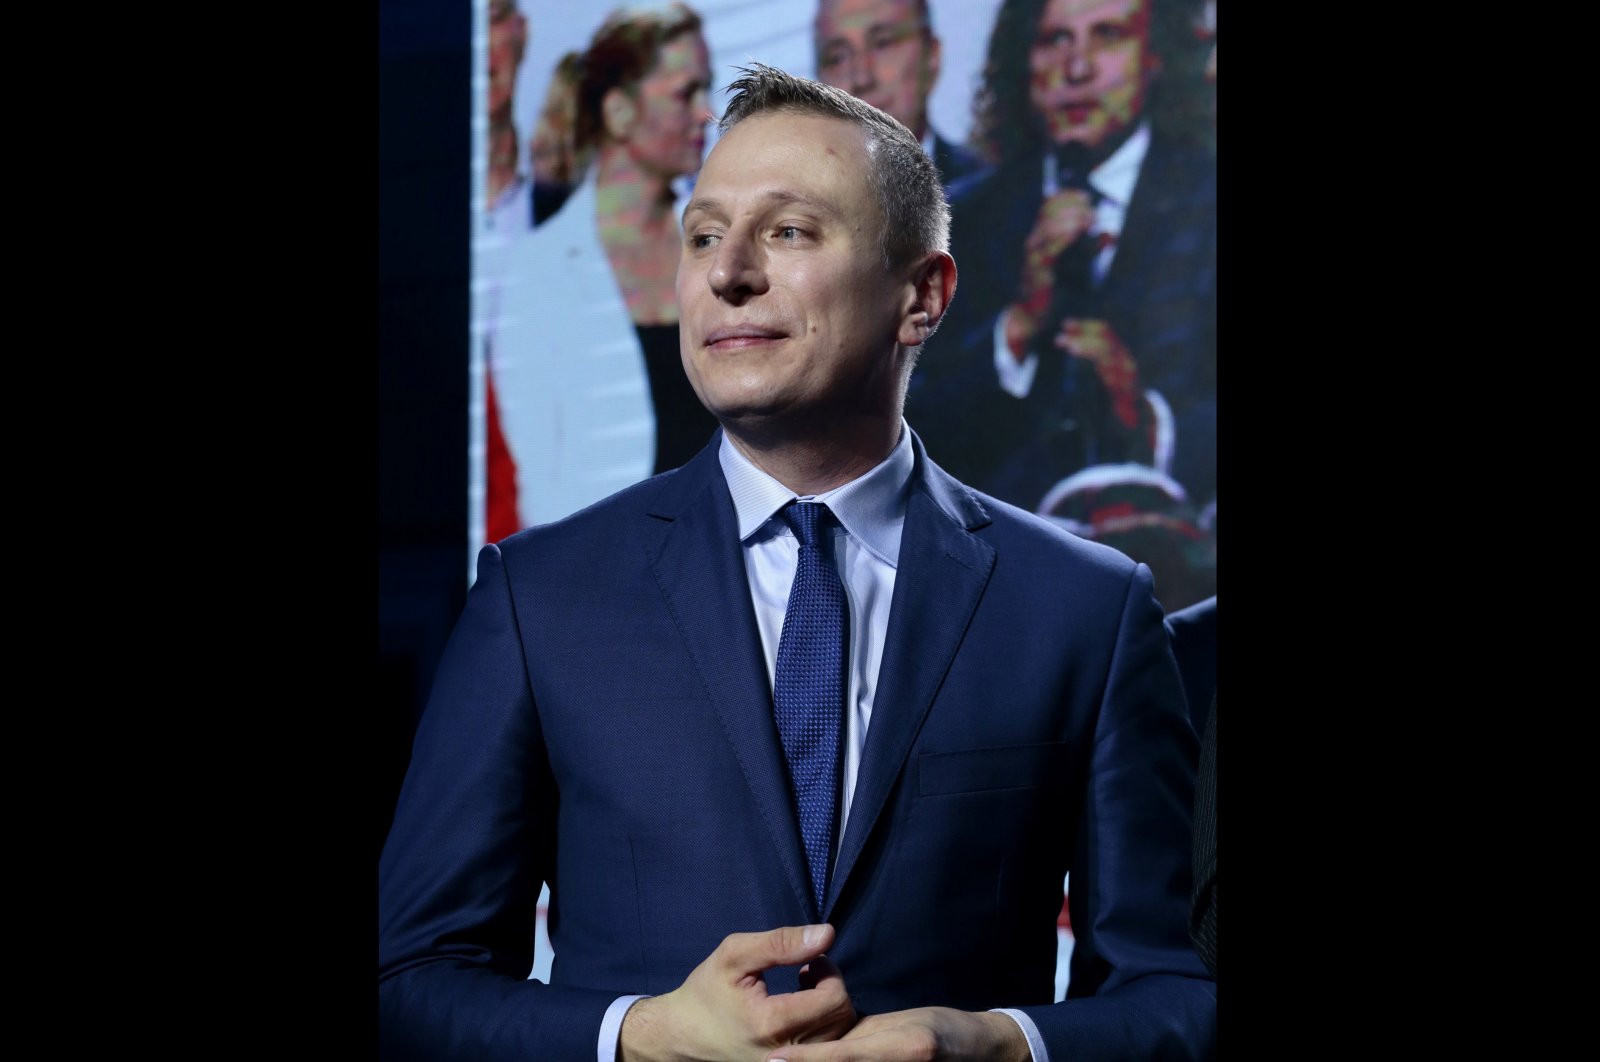 Polish Senator Krzysztof Brejza in Warsaw, on the night of parliamentary elections, Poland, Oct. 13, 2019. (AP Photo)